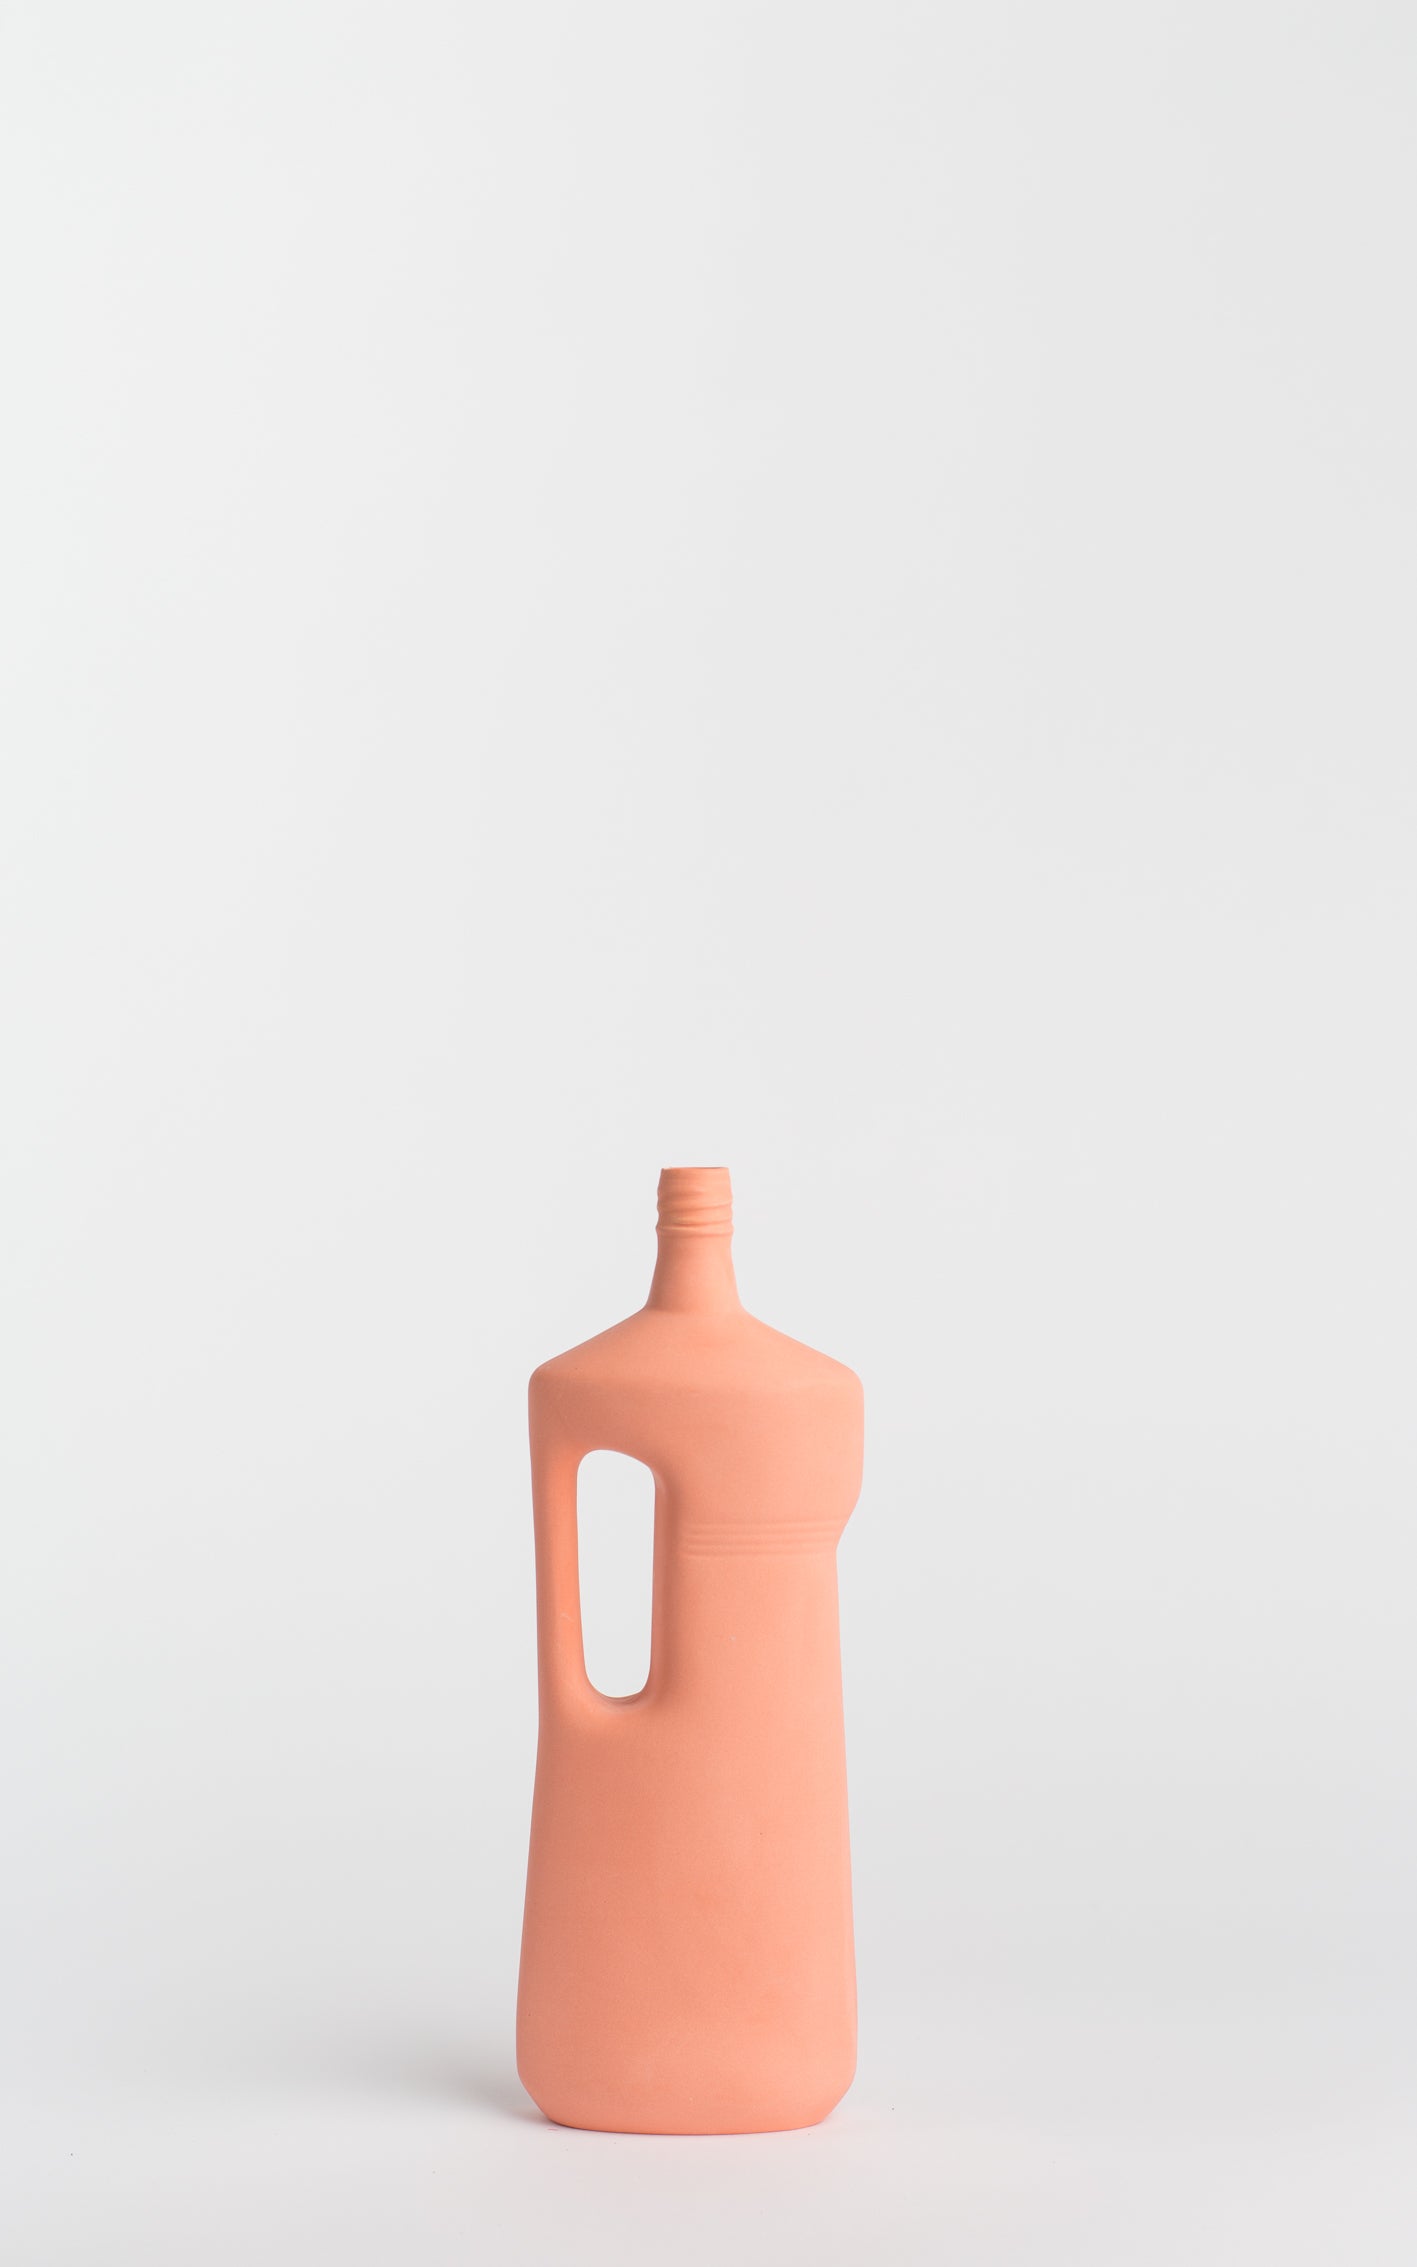 Foekje Fleur - Bottle vase #16 salmon